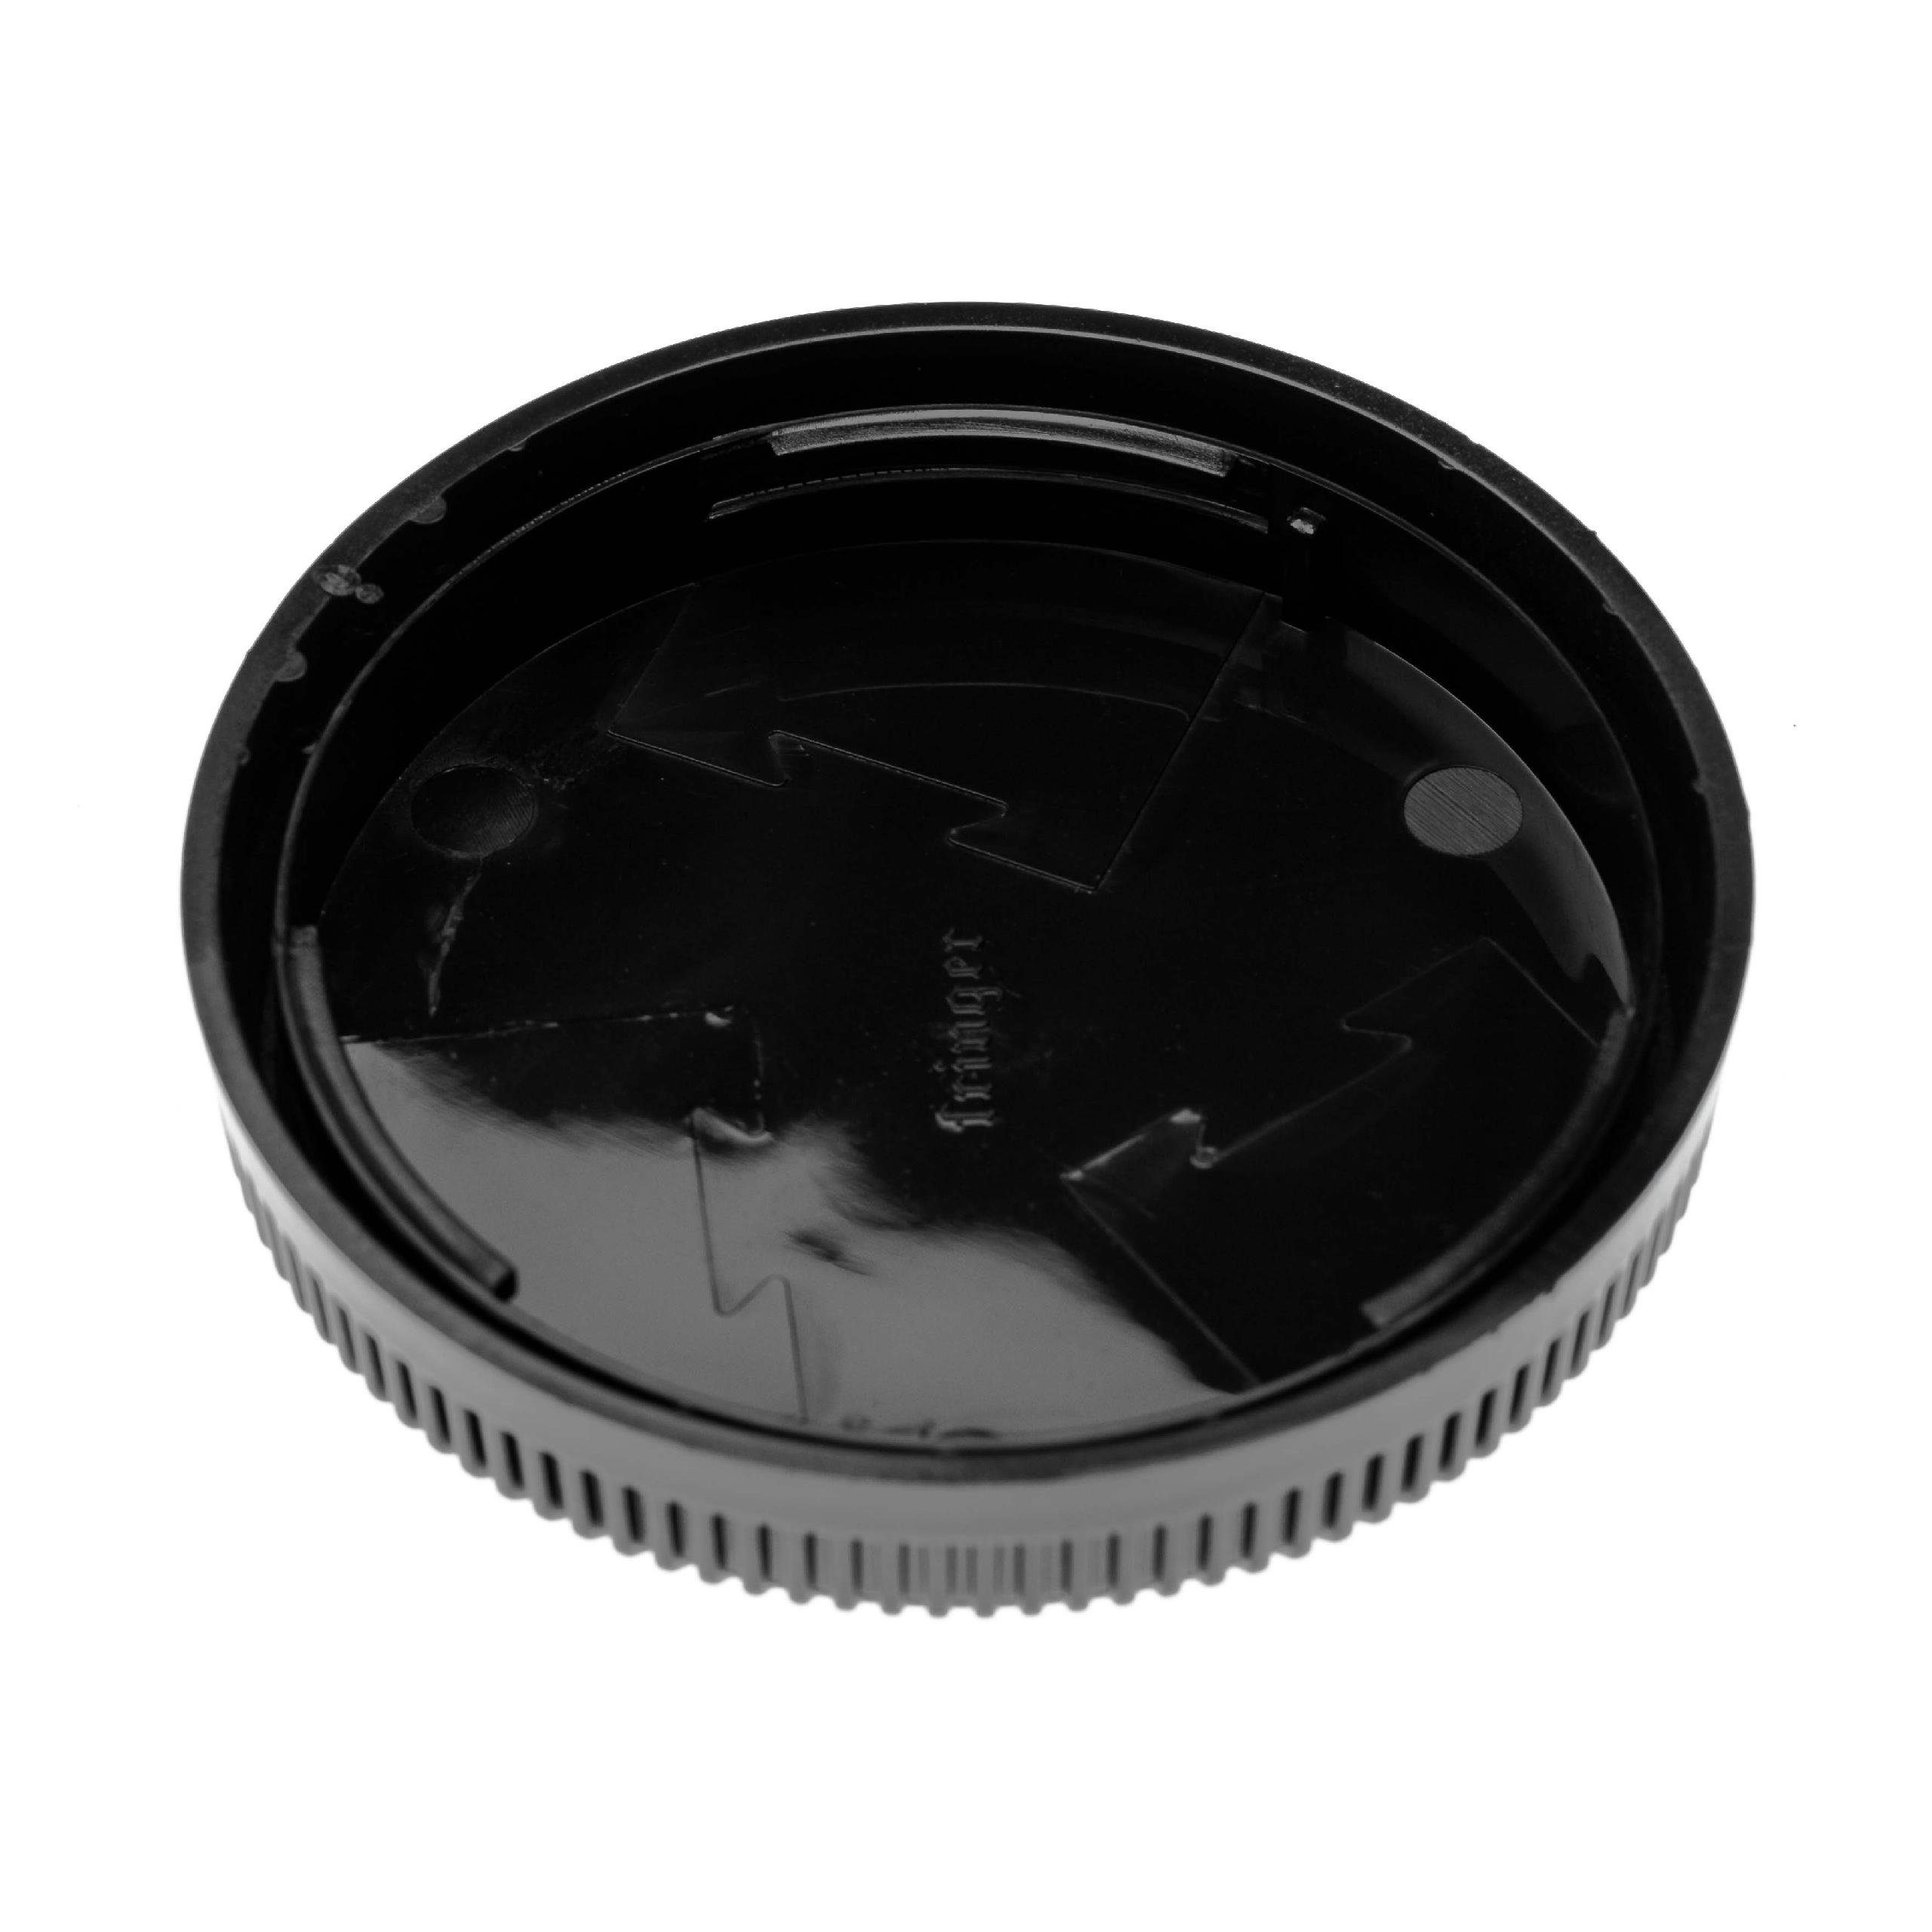 vhbw GFX-Serie Kamera Objektivrückdeckel passend für Fujifilm